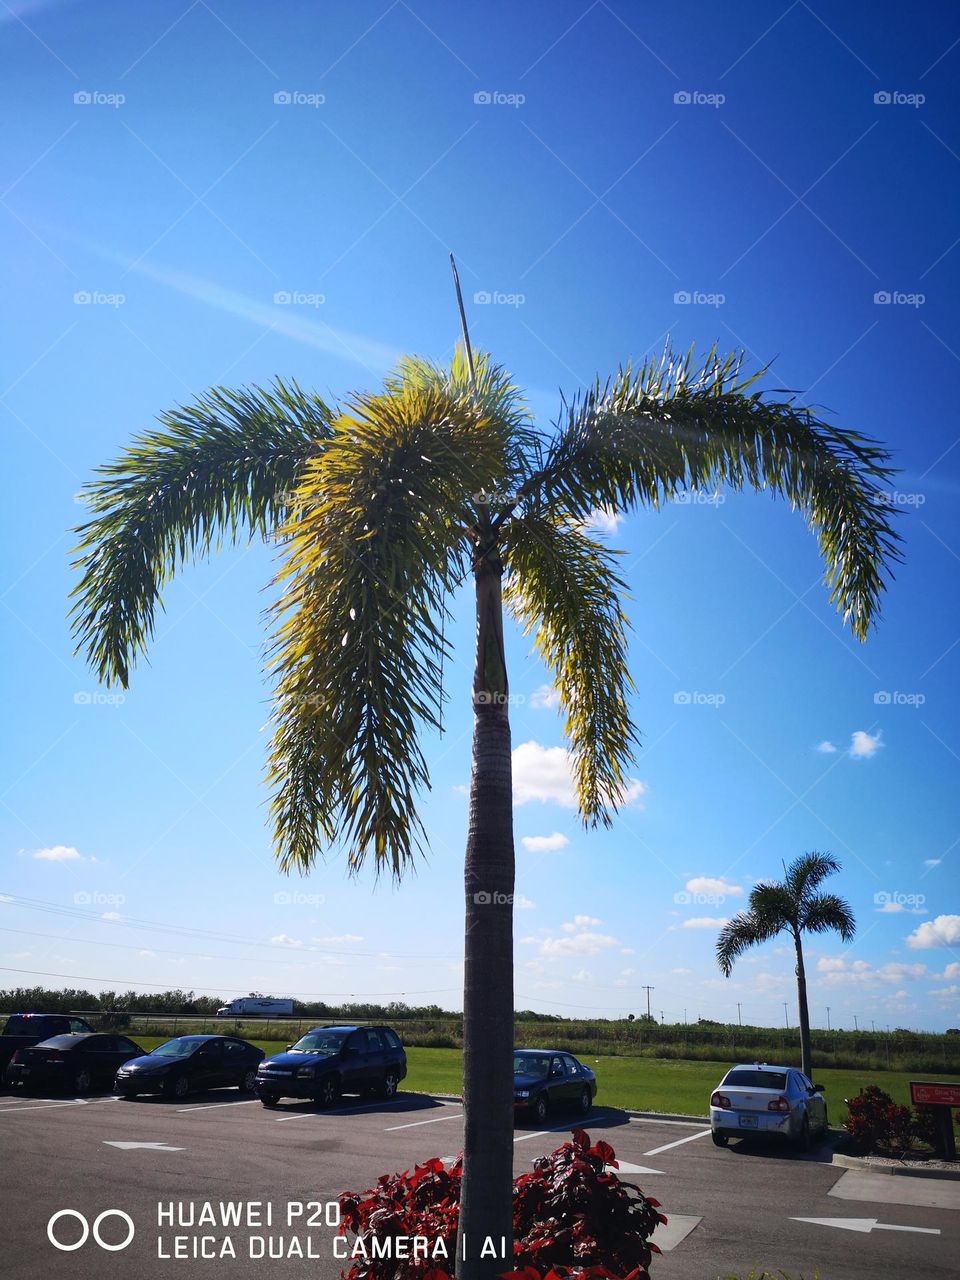 palm tree sky